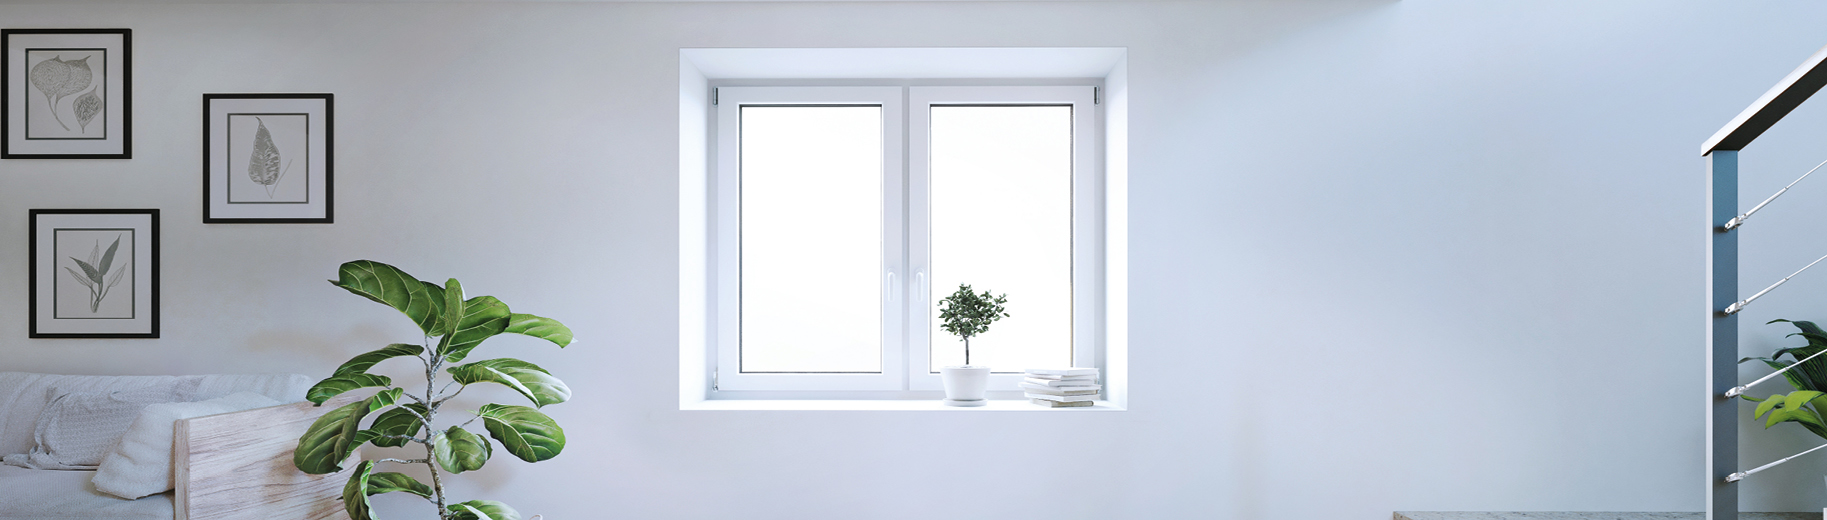 Aco-them-leibungsfenster-großformate-header-1370x390-1